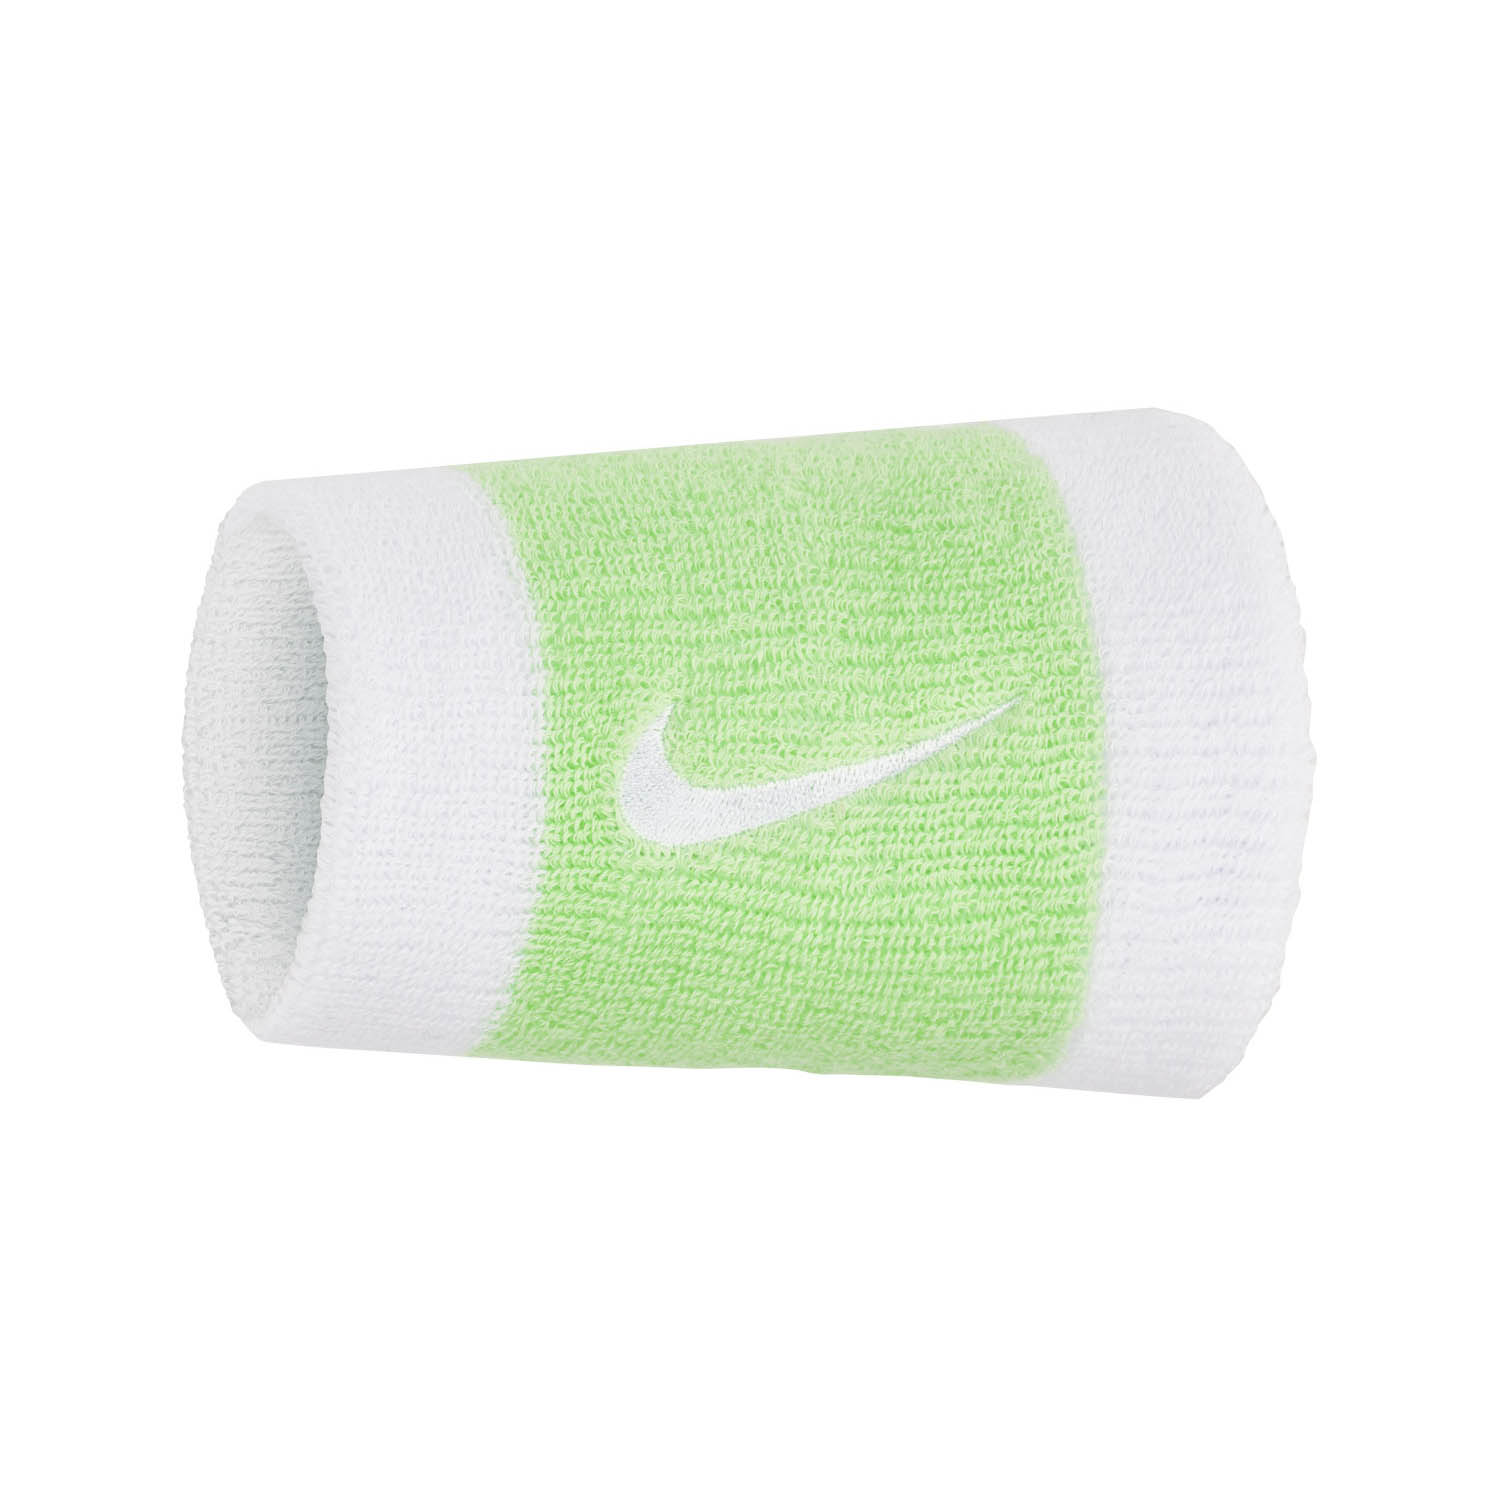 Nike Premier Large Wristbands - White/Vapor Green